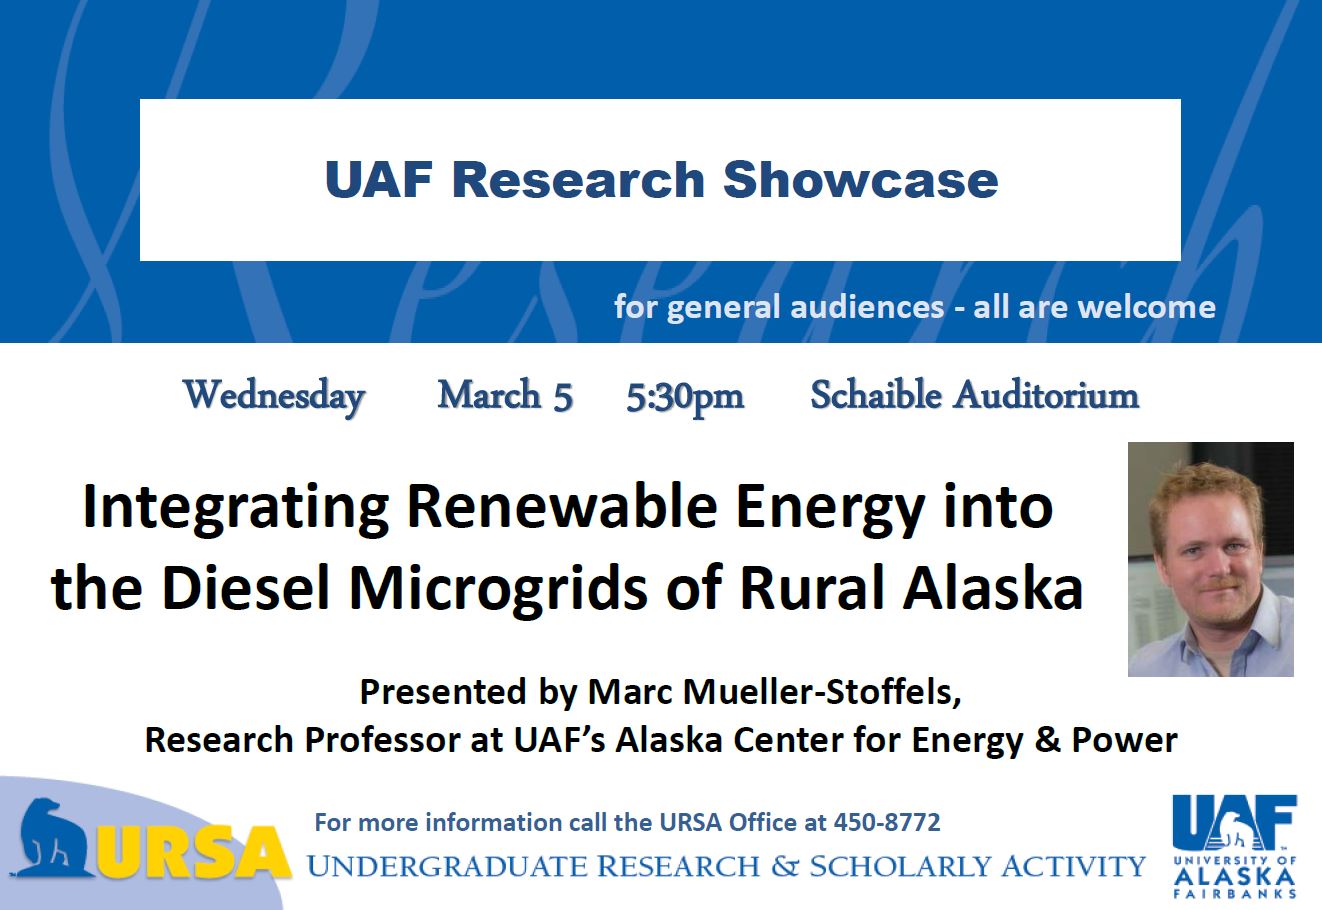 Marc Mueller-Stoffels to Speak on Microgrid Integration at UAF Research Showcase Seminar